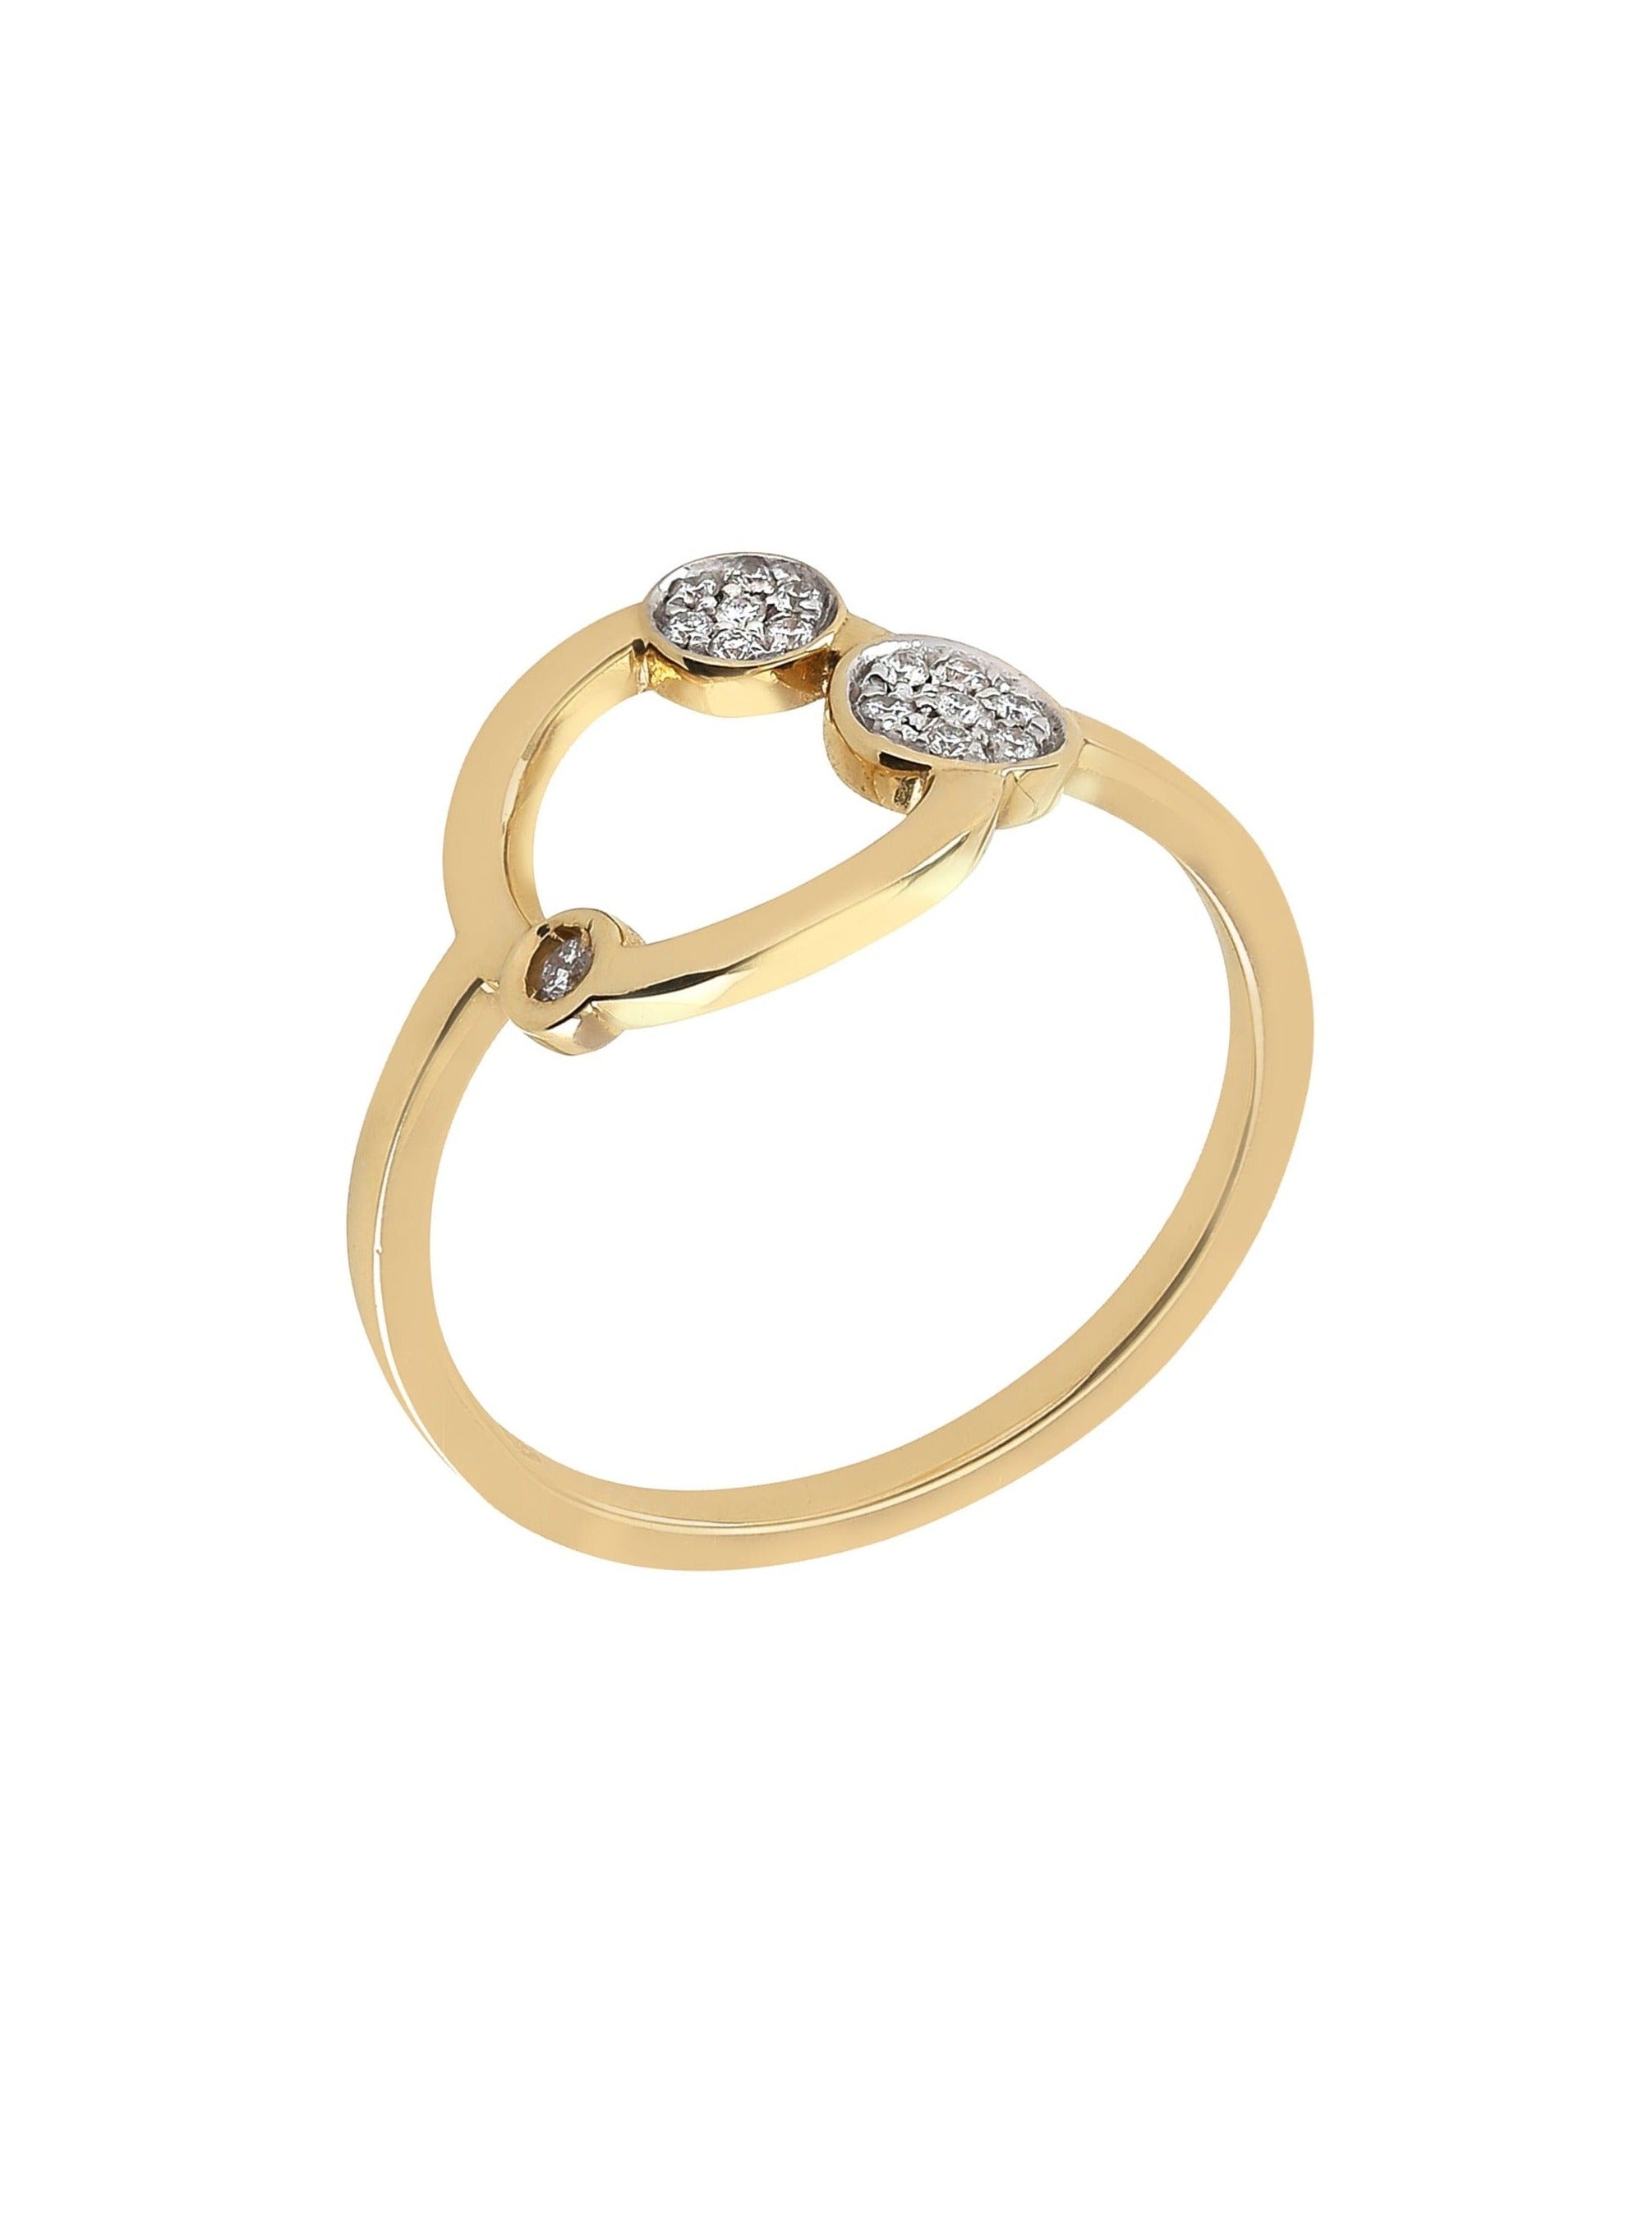 Galaxy - Ring in 18-karat gold with diamonds